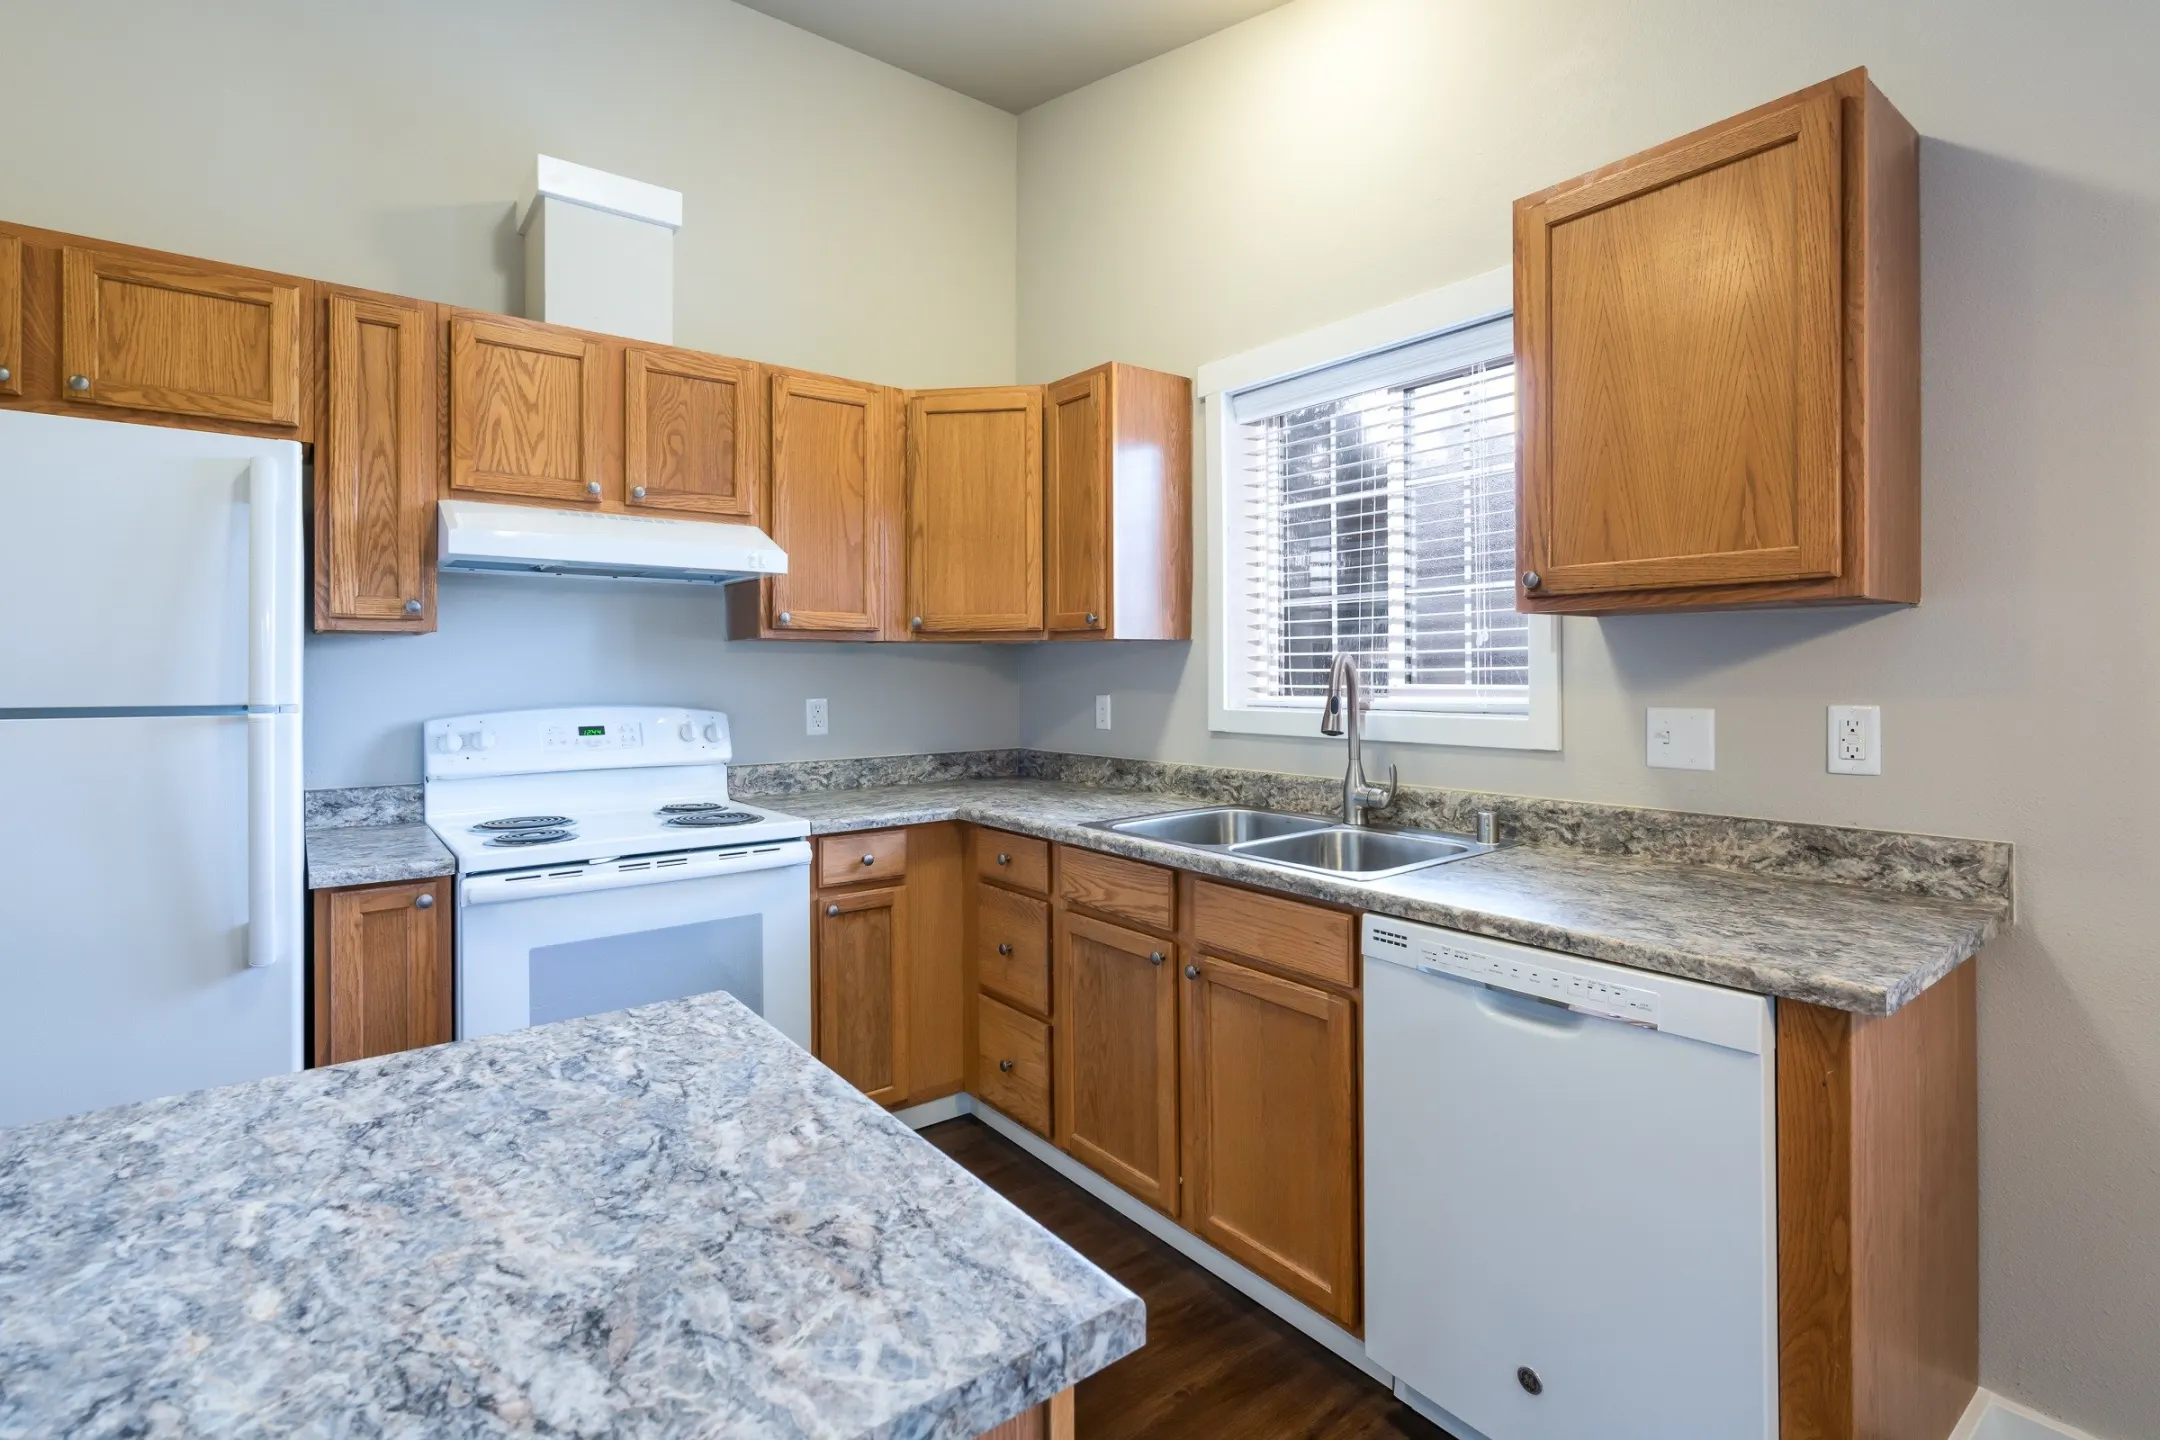 Kitchen - Nisqually Ridge Apartments - Lacey, WA